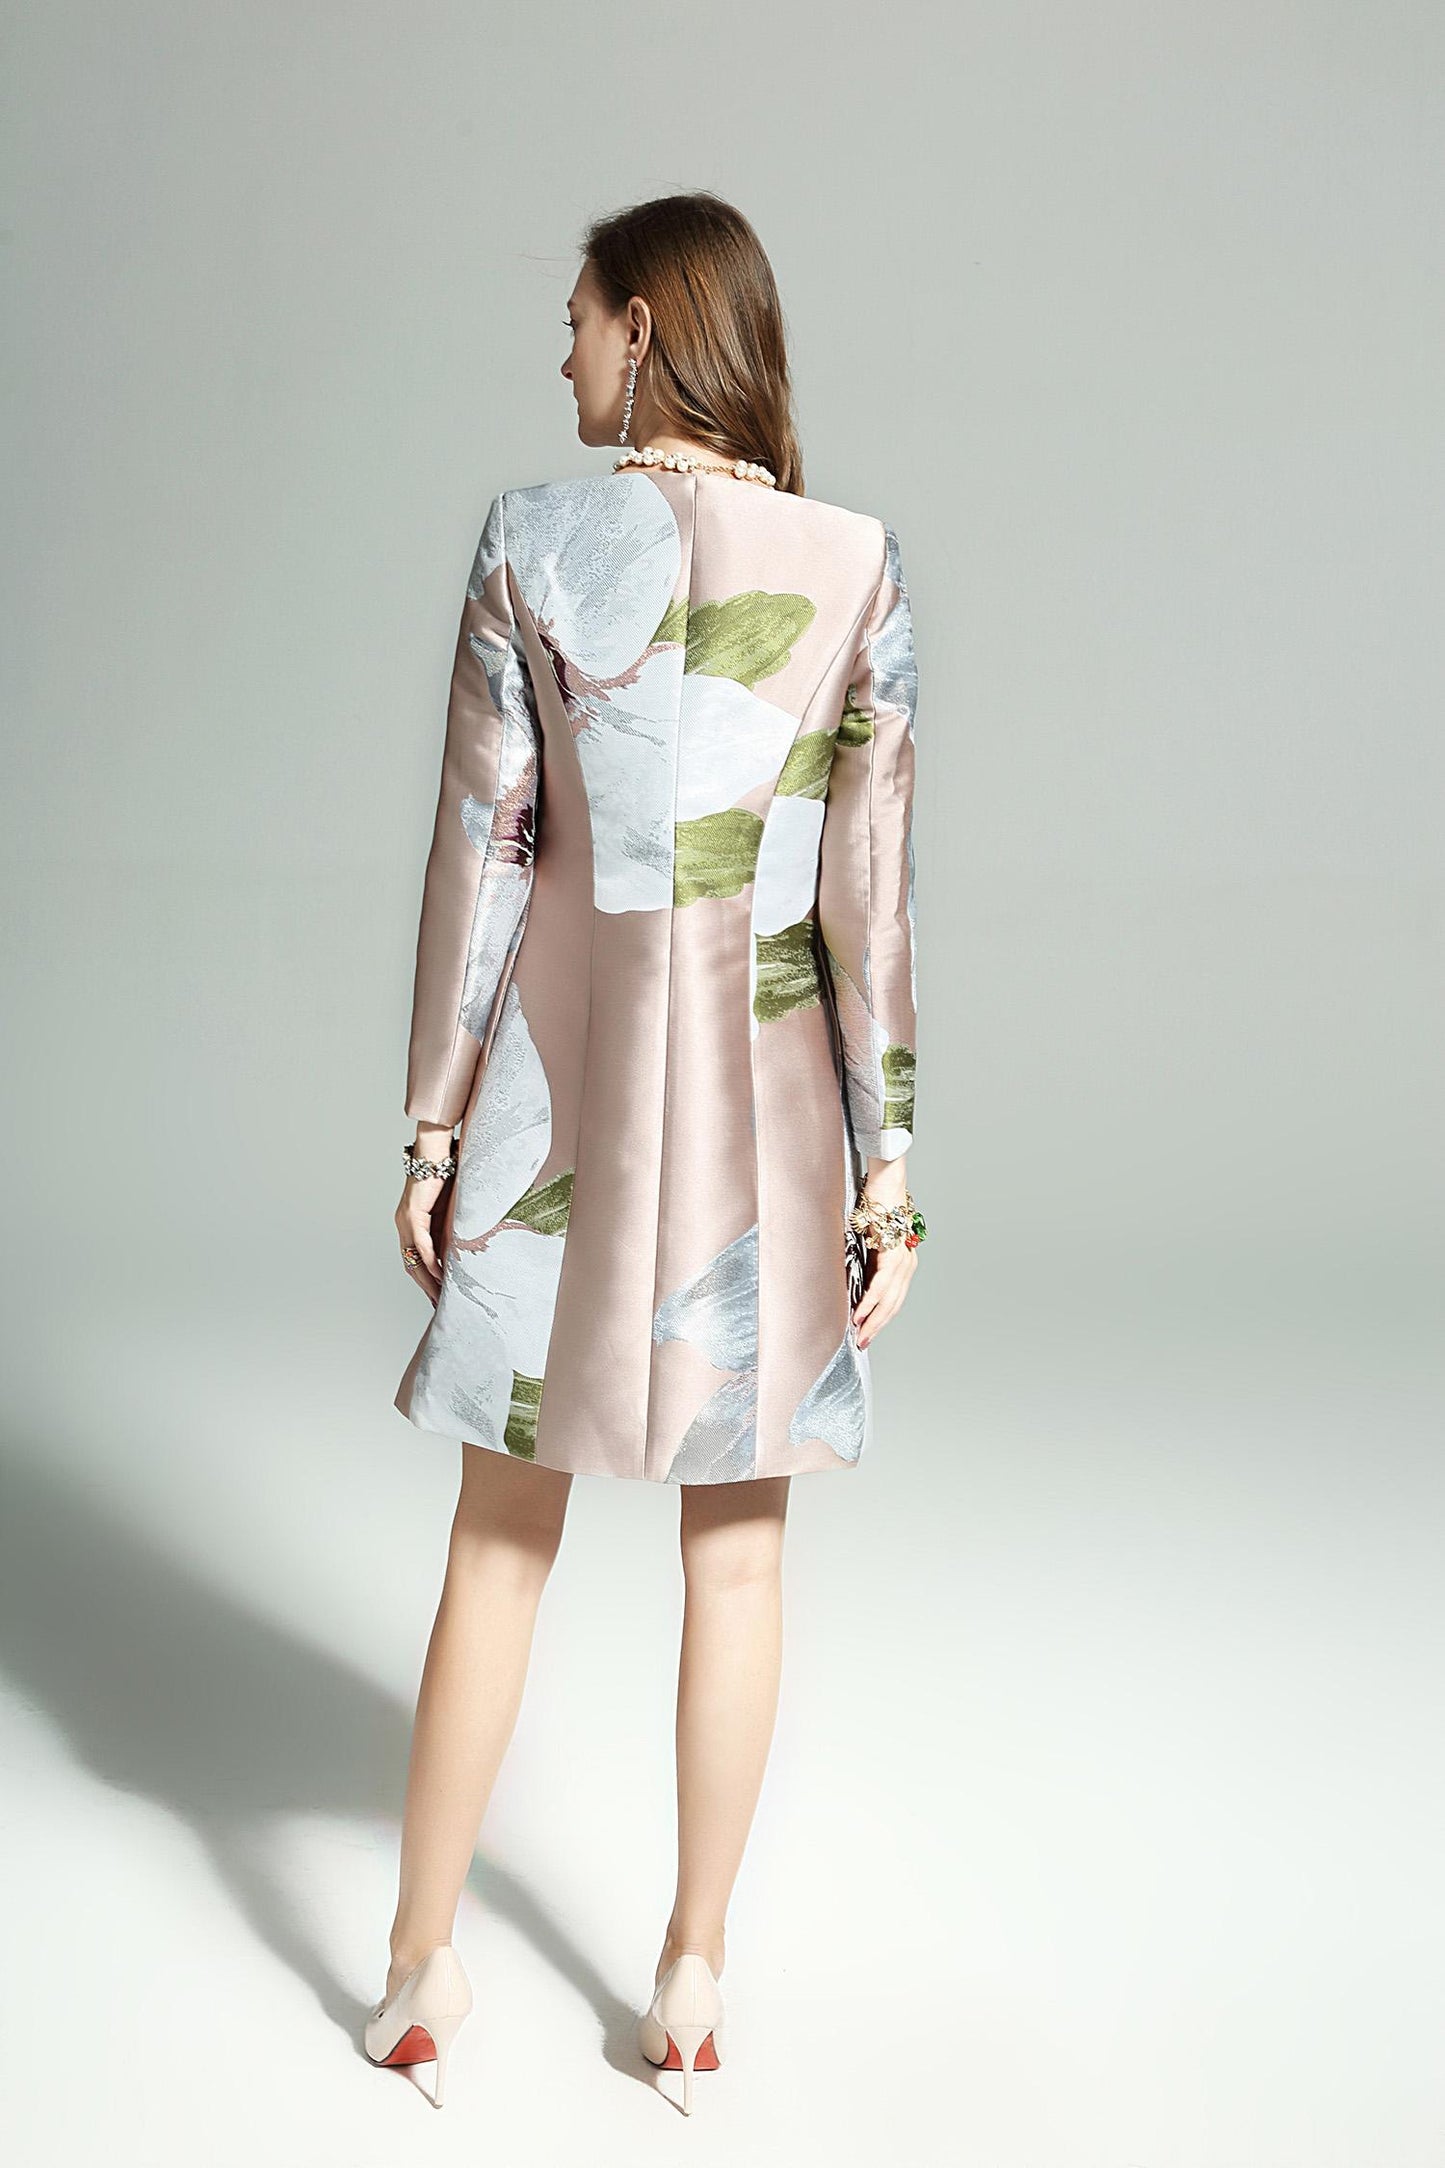 Limited Edition New Luxury Jacquard Print Windbreaker Coat jacket dress - Lane